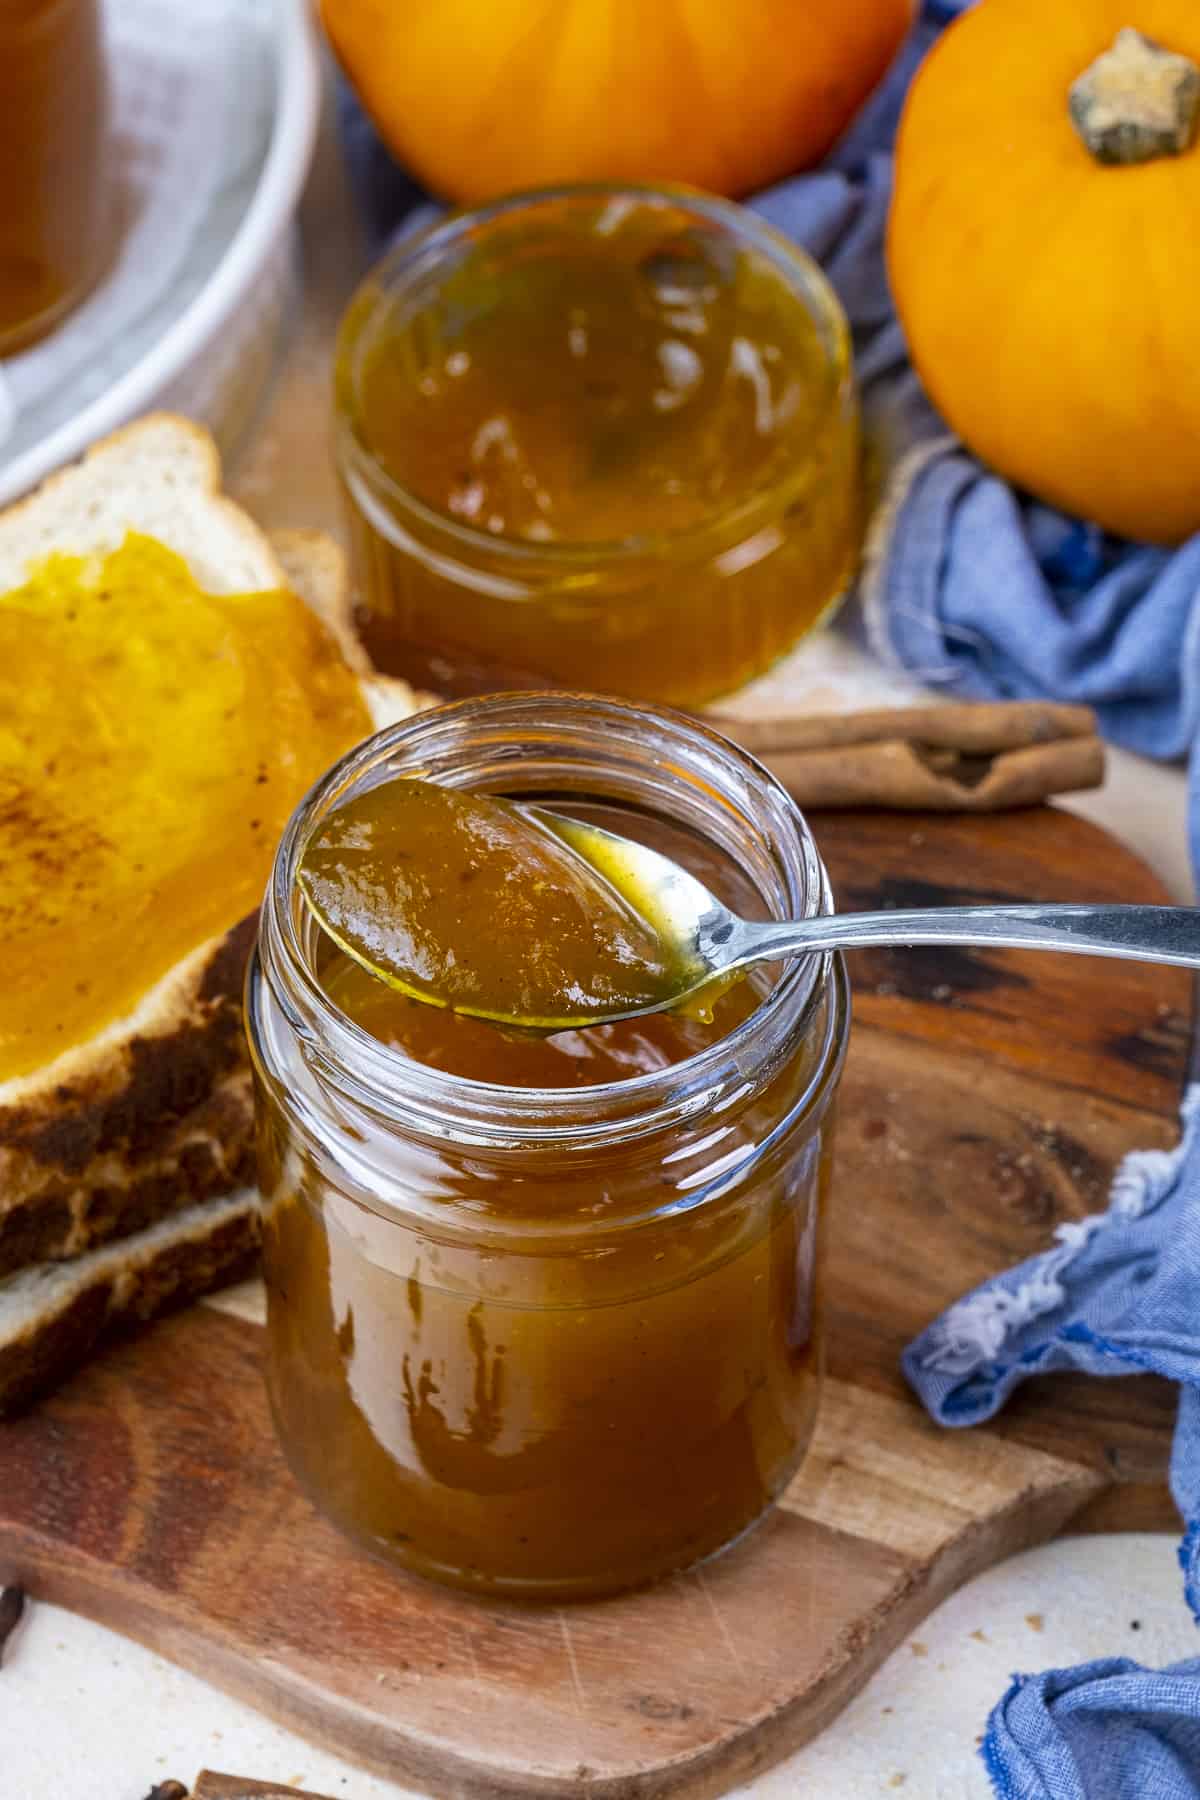 Pumpkin jam in a jar and spoon in it.